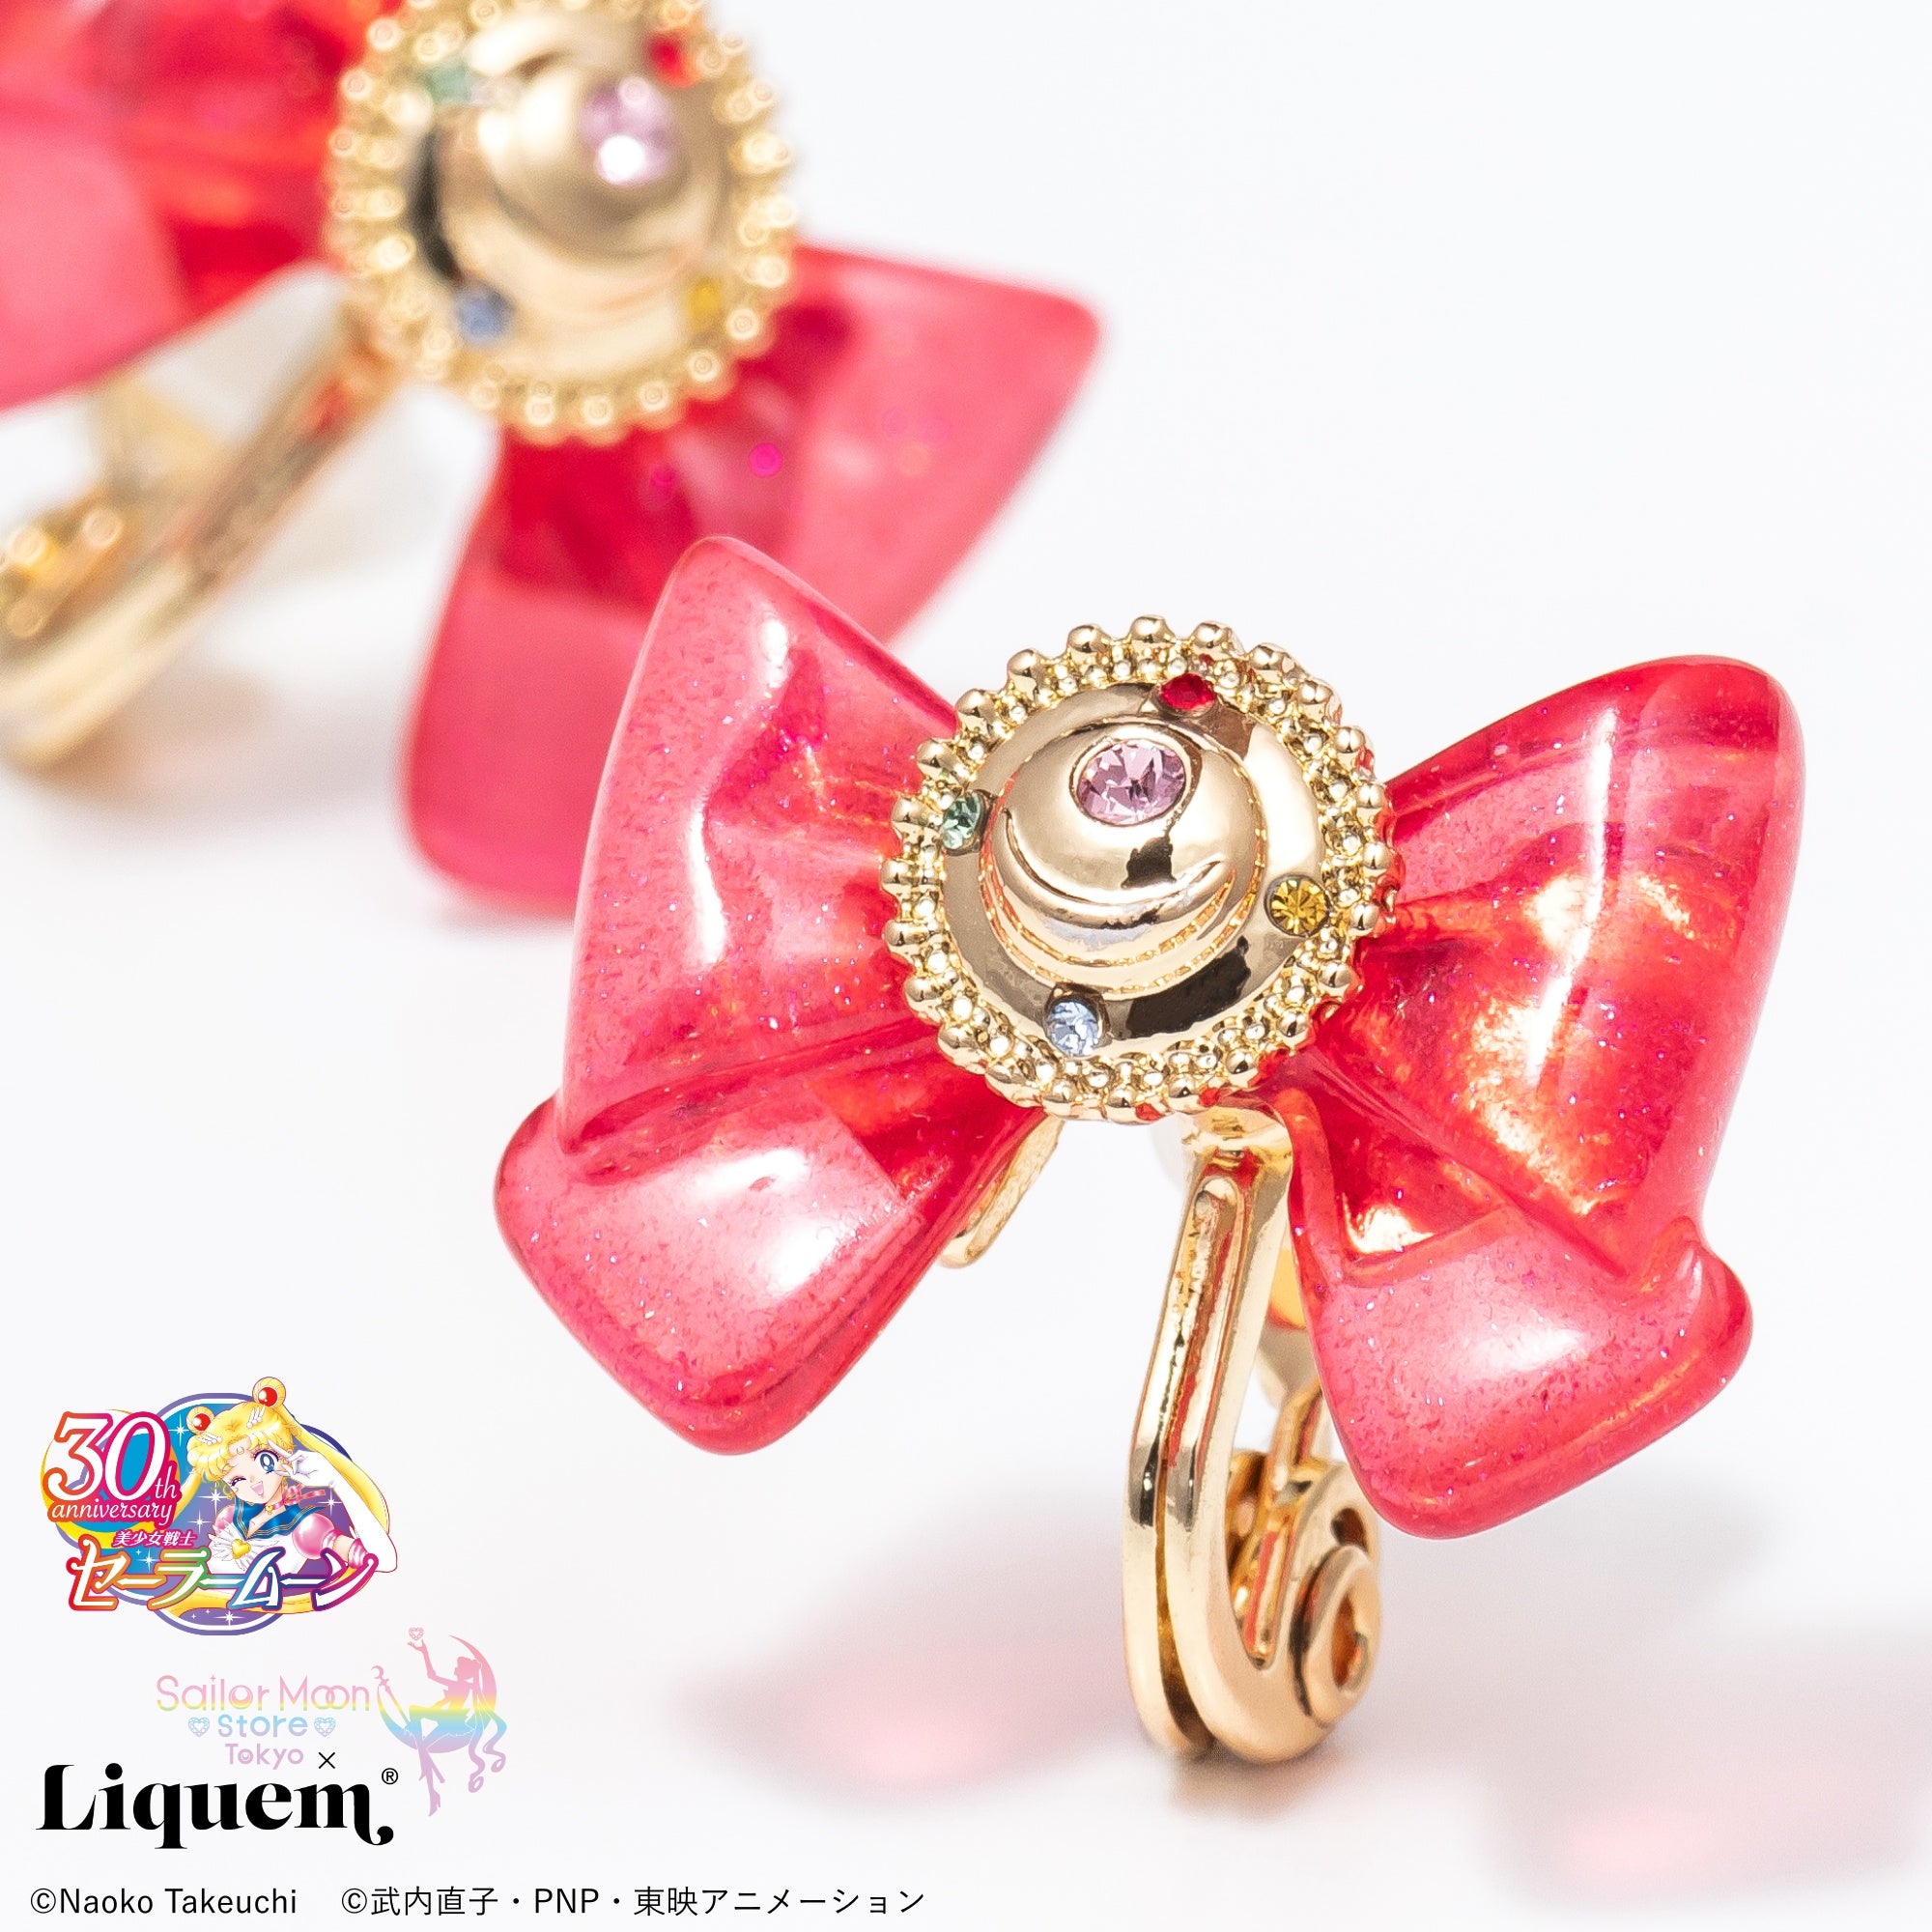 Sailor Moon store x Liquem / 変身ブローチリボンイヤリング